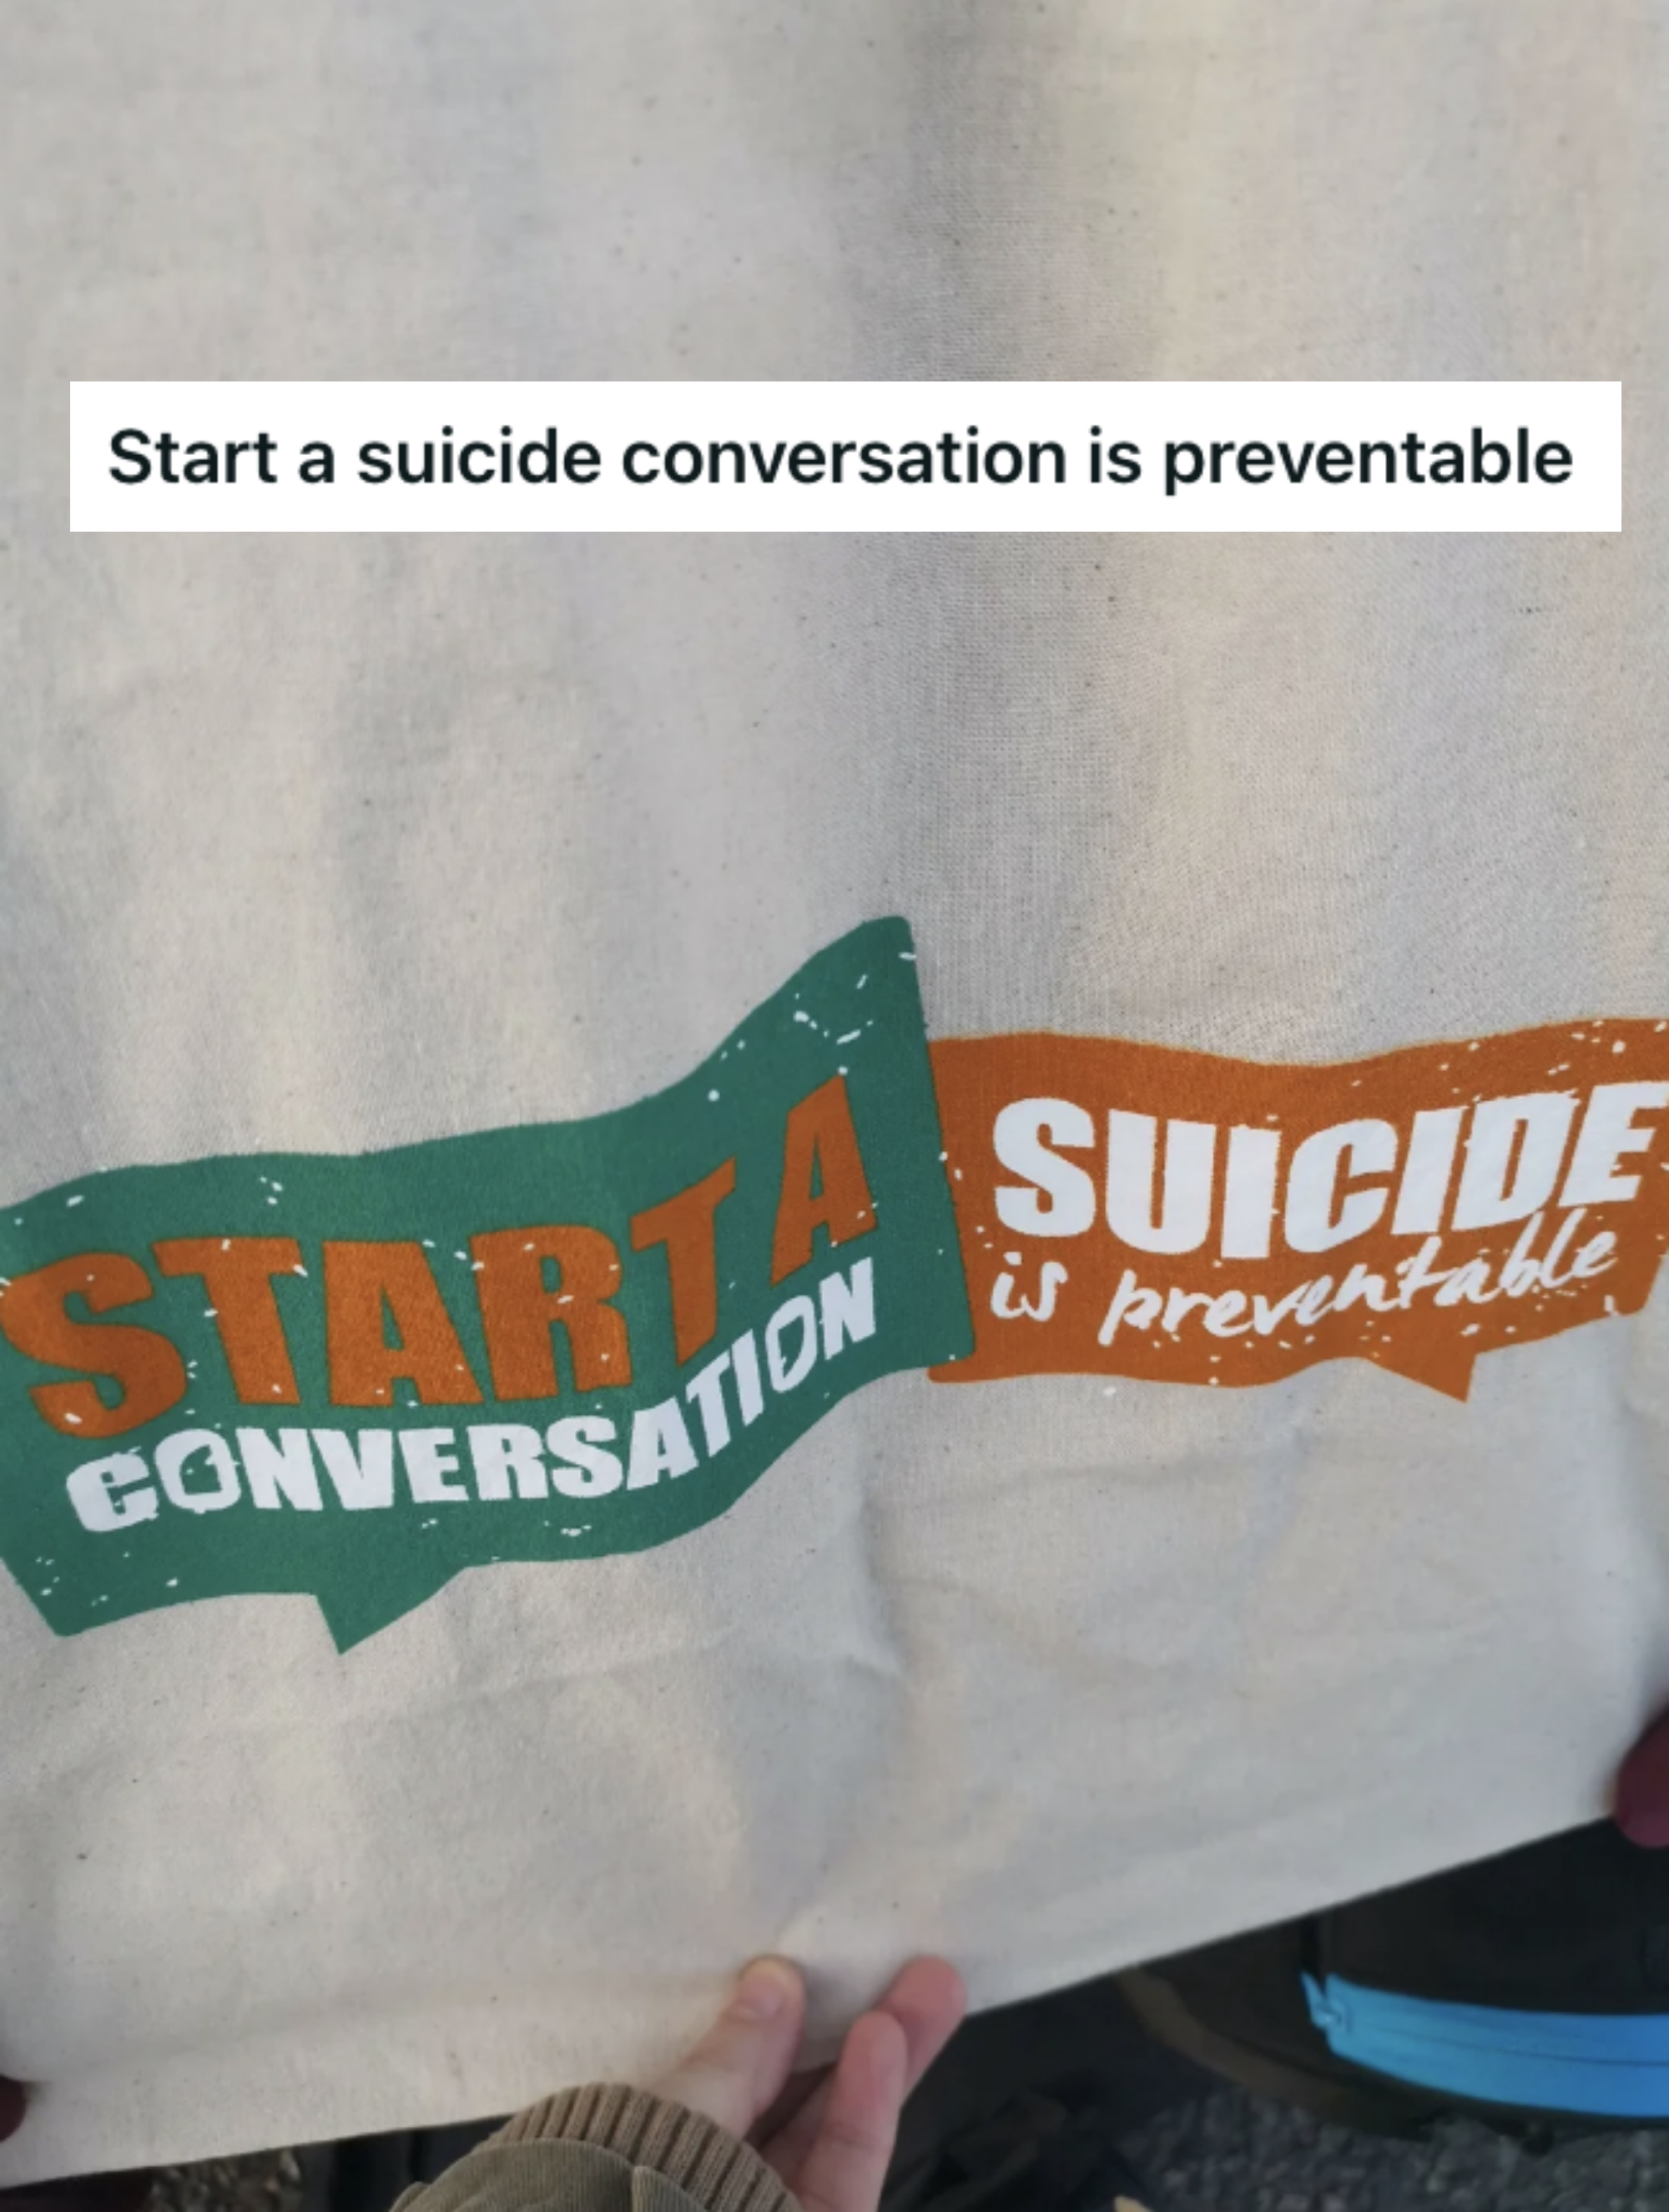 Start a suicide conversation is preventable